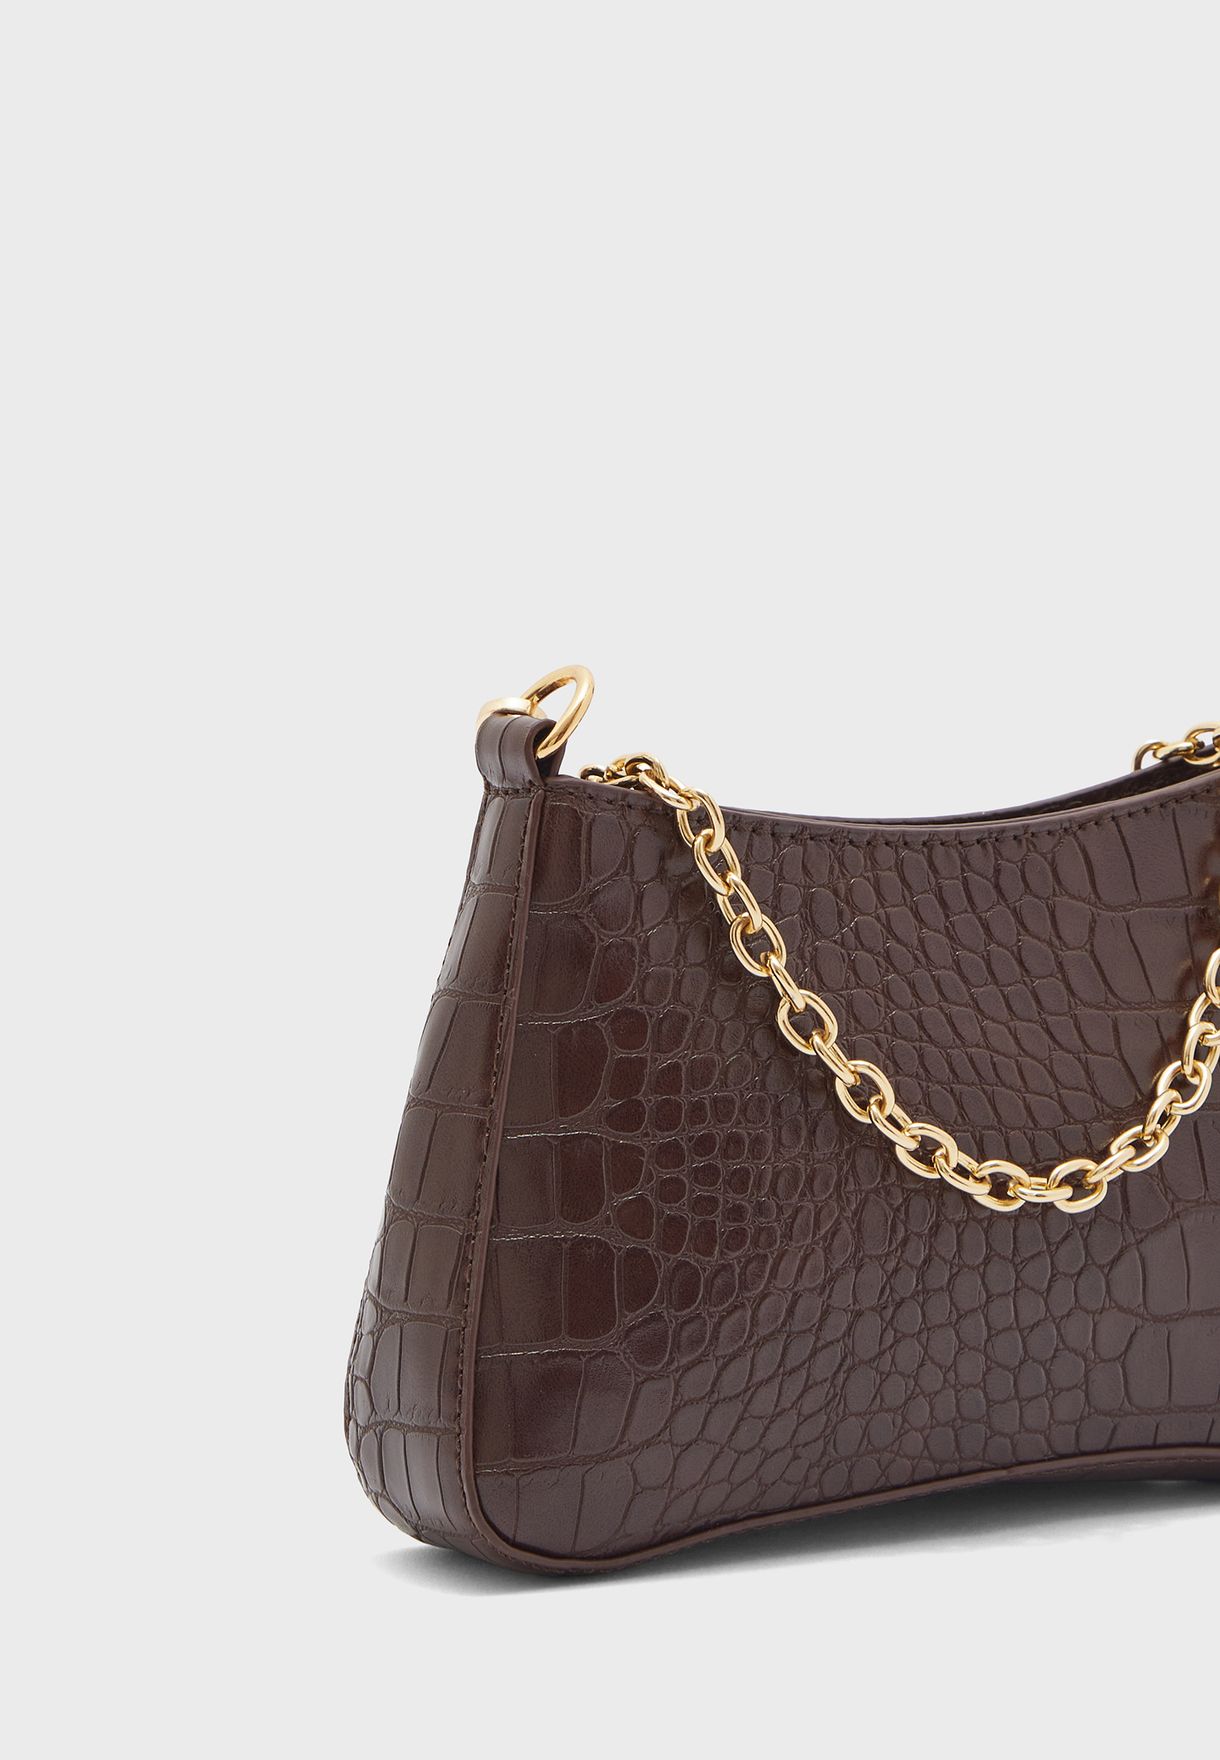 Croc Shoulder Bag With Chain Strap